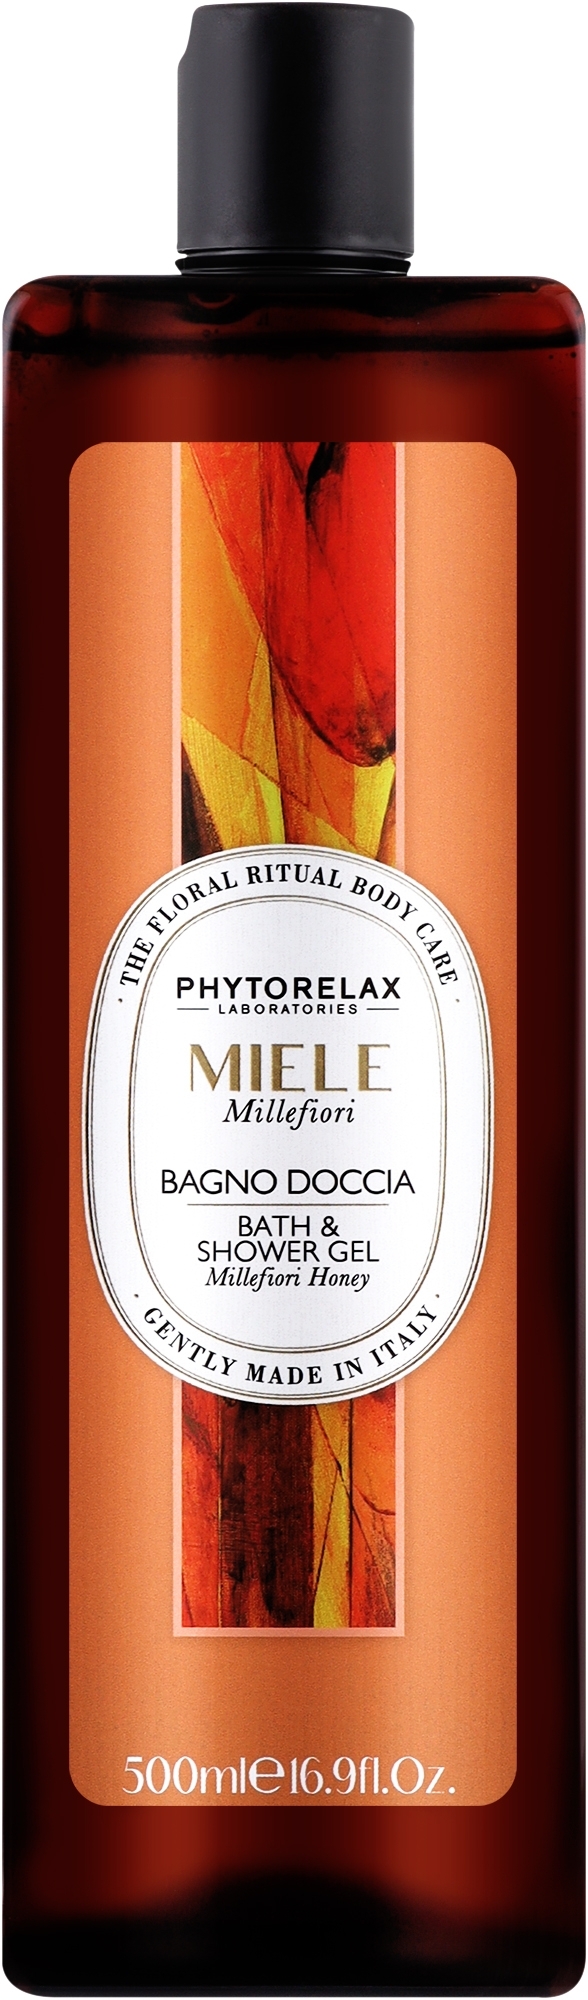 Bath & Shower Gel 'Millefiori Honey' - Phytorelax Laboratories Floral Ritual Bath & Shower Gel — photo 500 ml